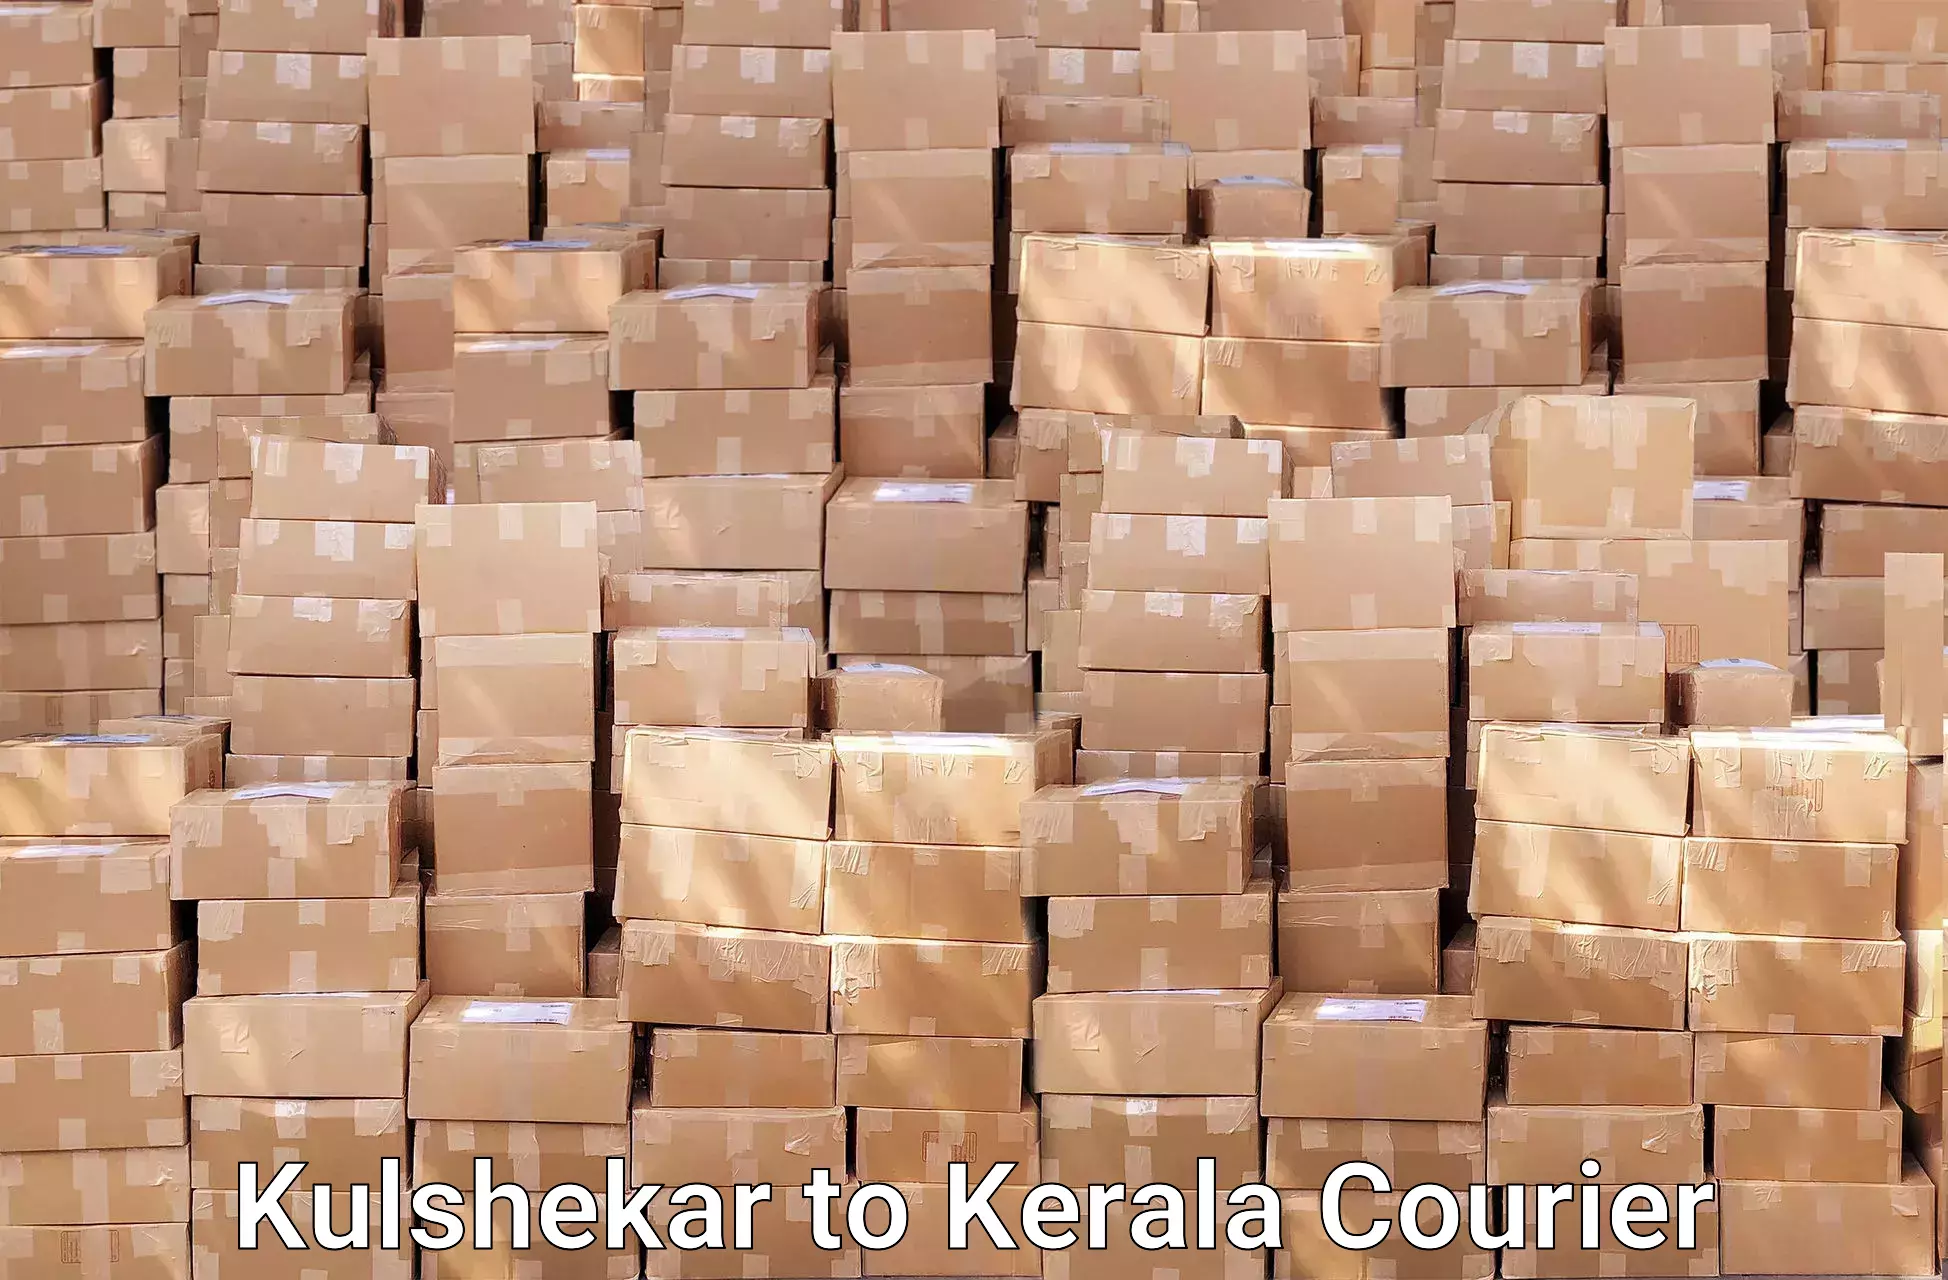 Moving and storage services Kulshekar to Kerala